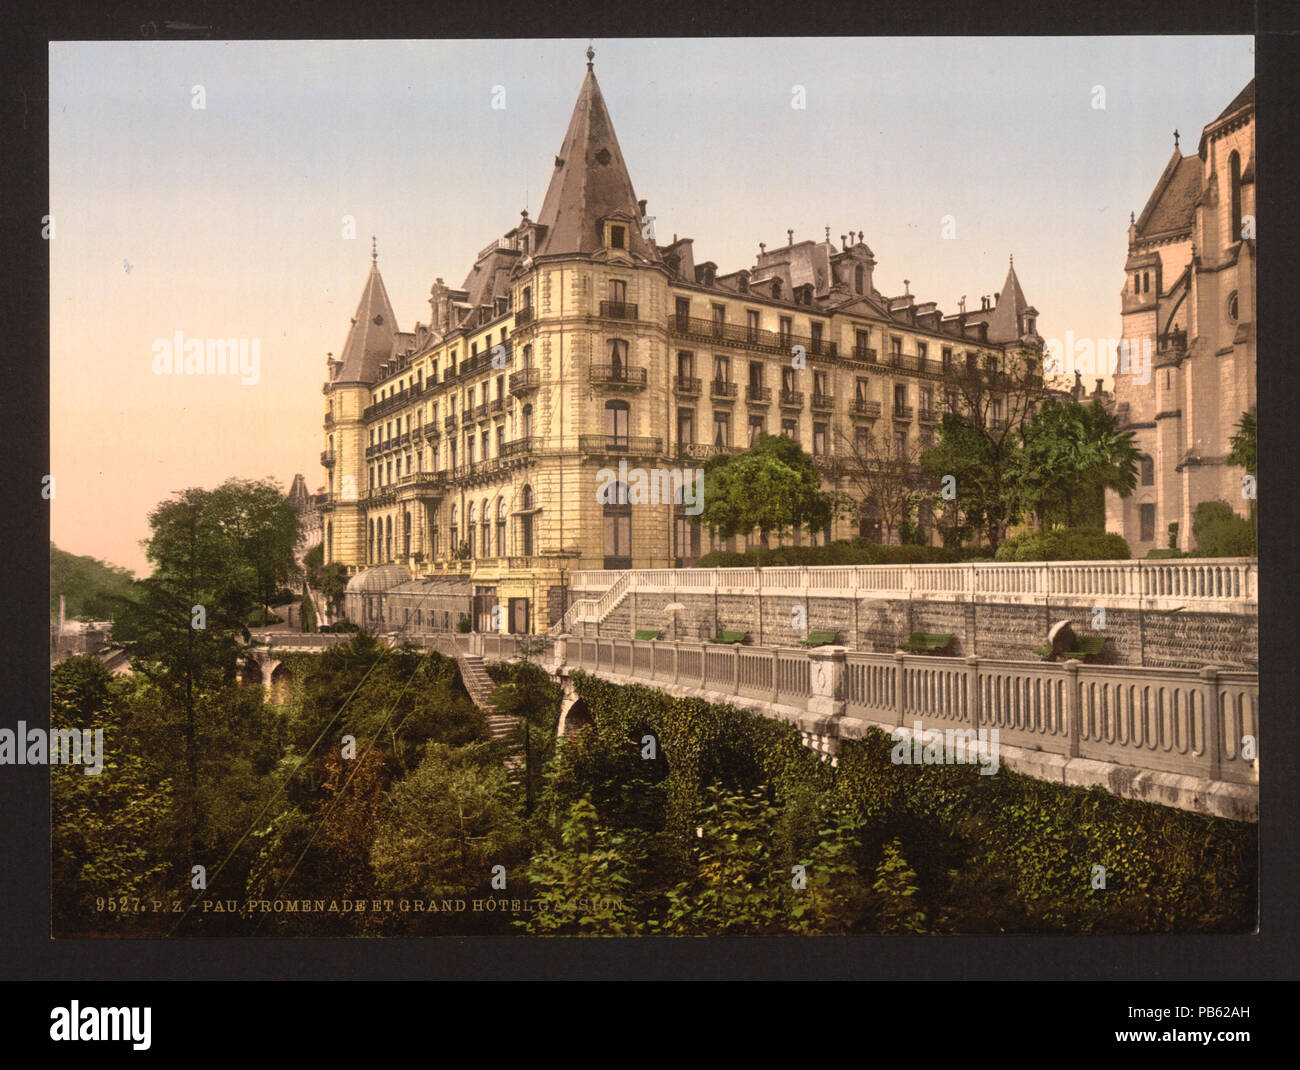 1231 Promenade und Grand Hotel Gassion, Pau, Pyrenäen, Frankreich - LCCN 2001698667 Stockfoto